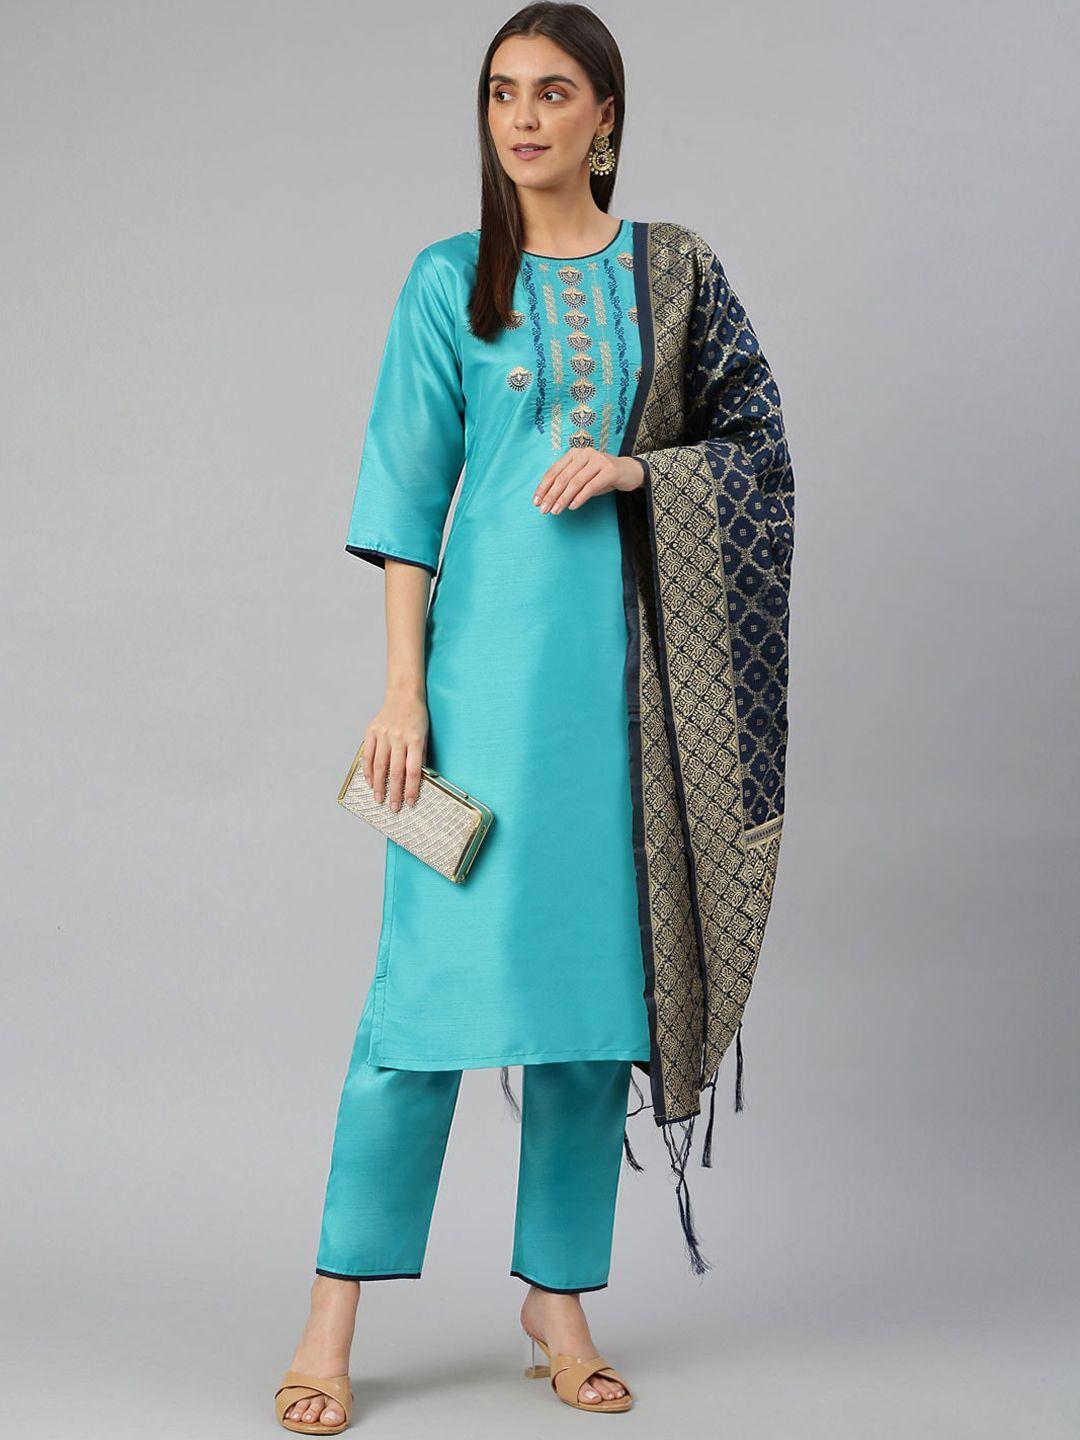 lilots women turquoise blue ethnic motifs yoke design thread work kurta with trousers & with dupatta